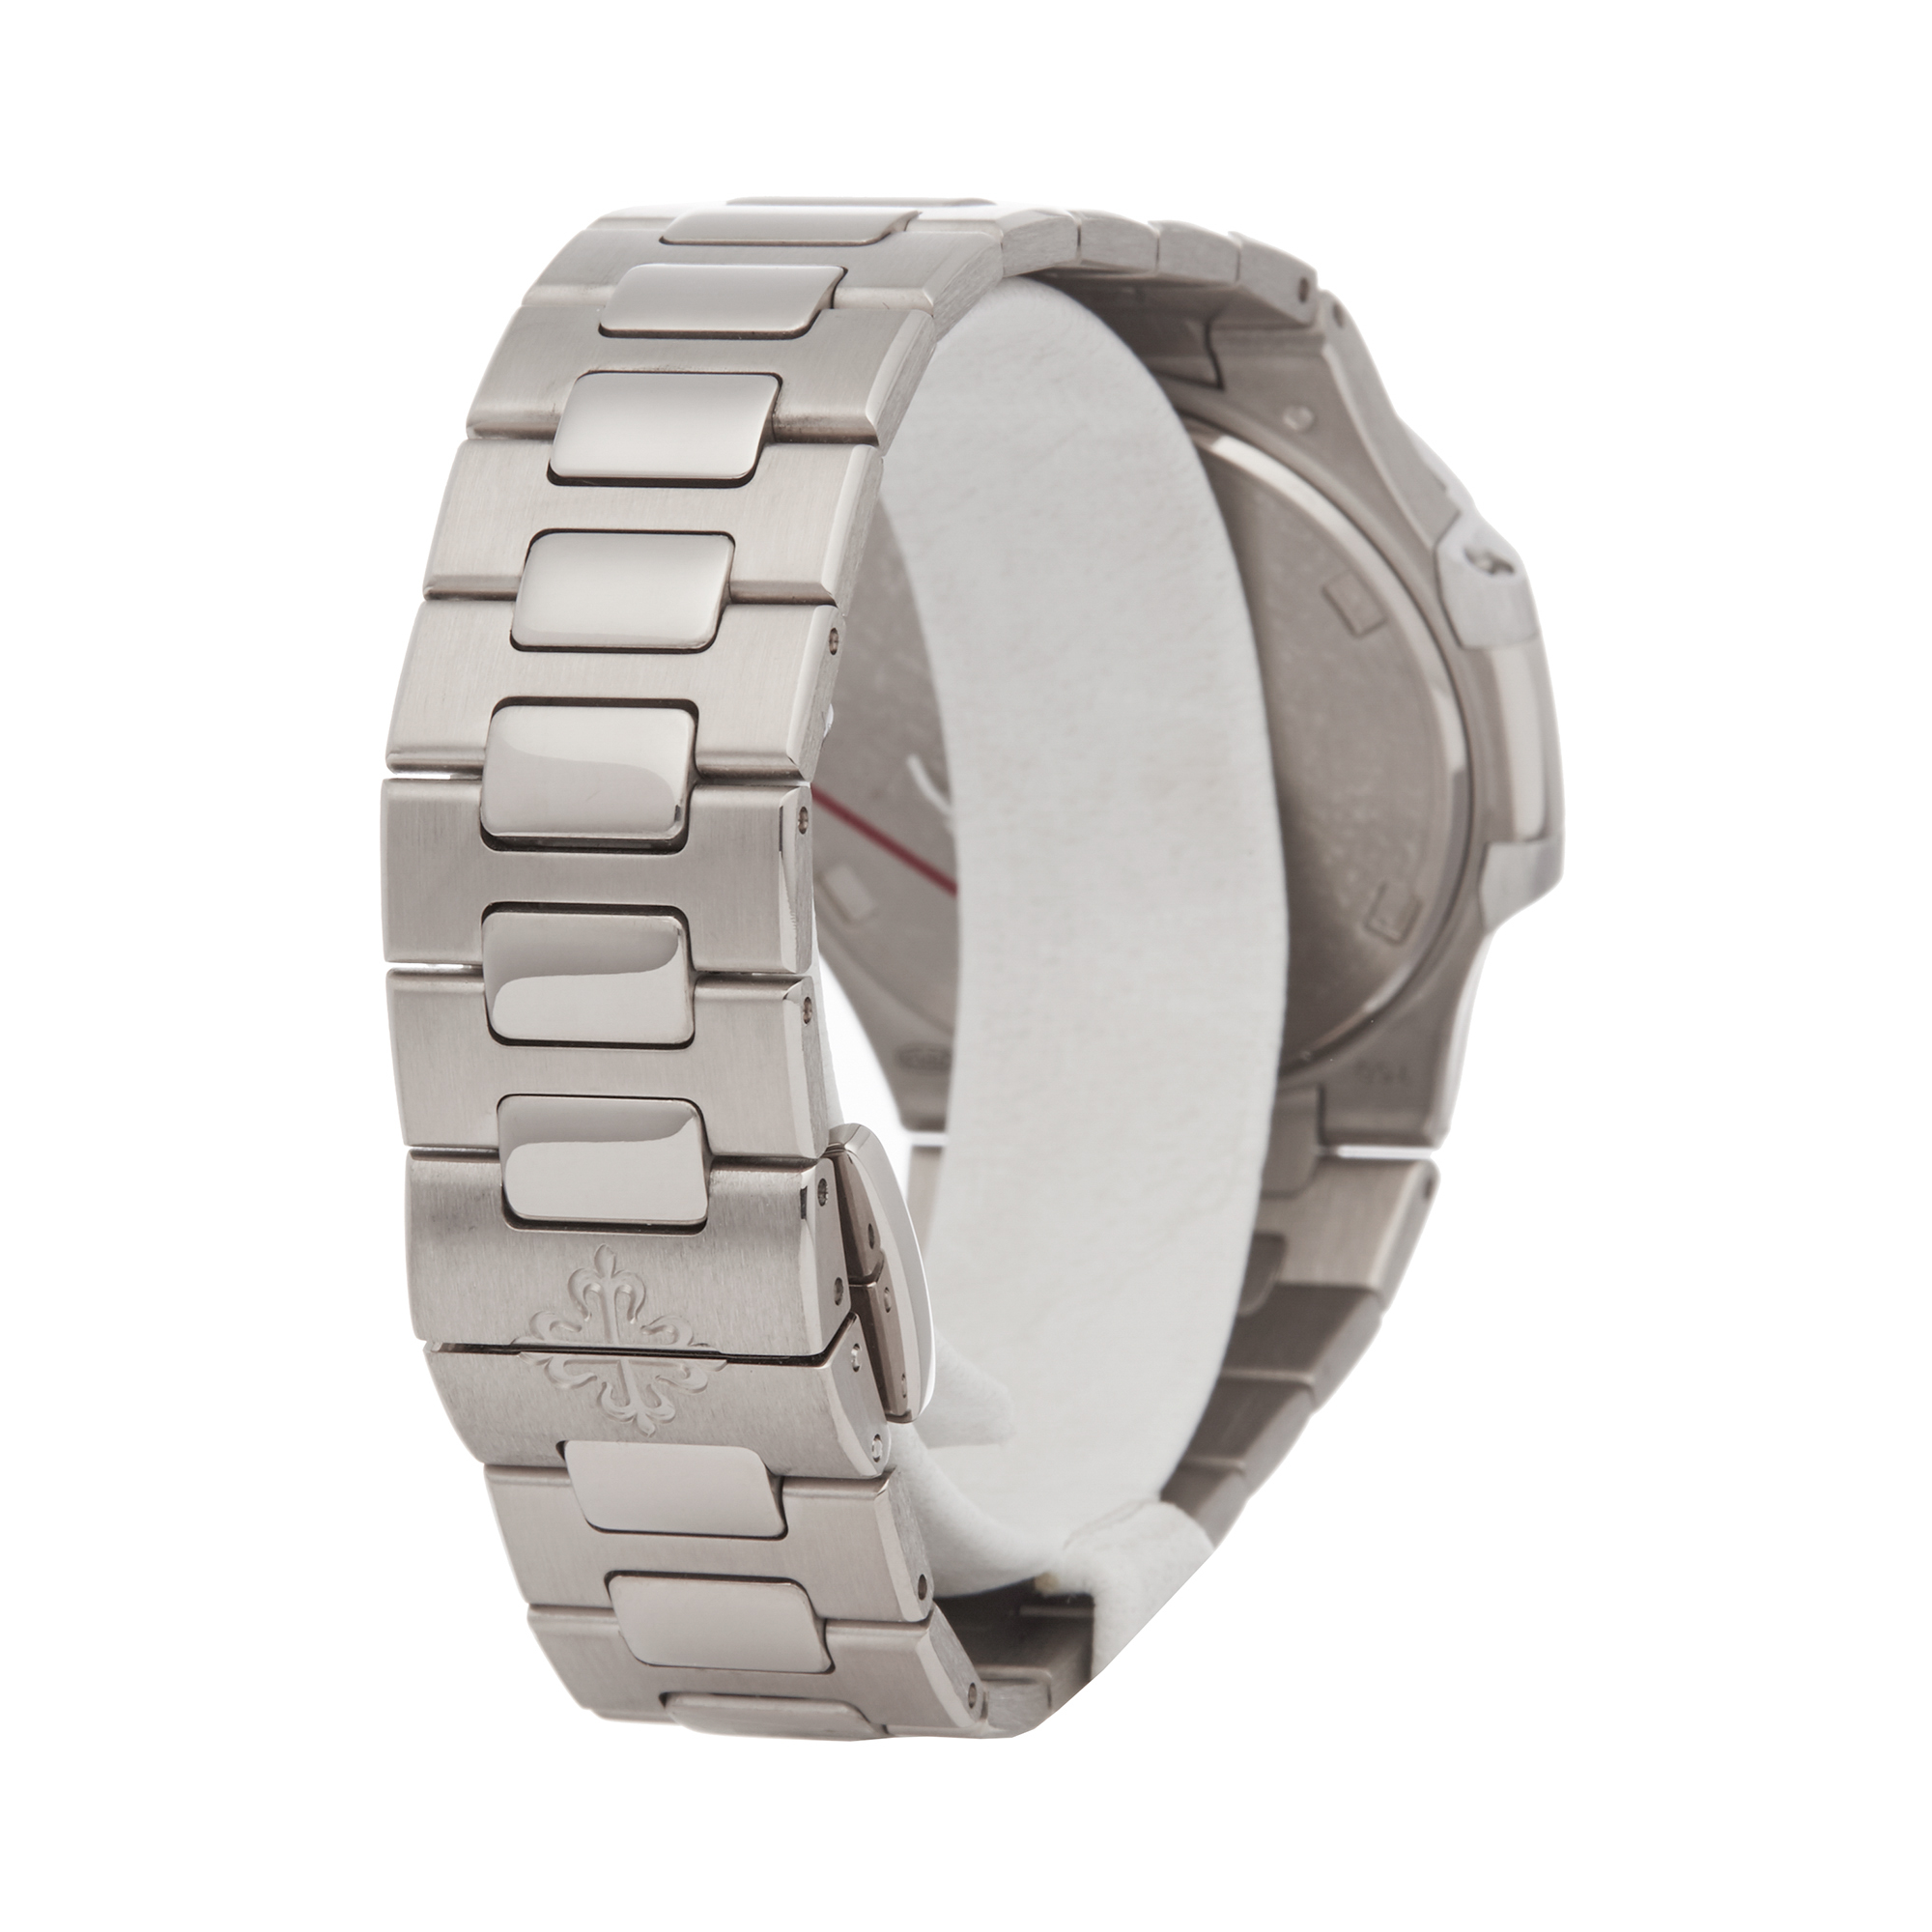 Patek Philippe Nautilus 7010G Ladies White Gold Diamond Watch - Image 5 of 8